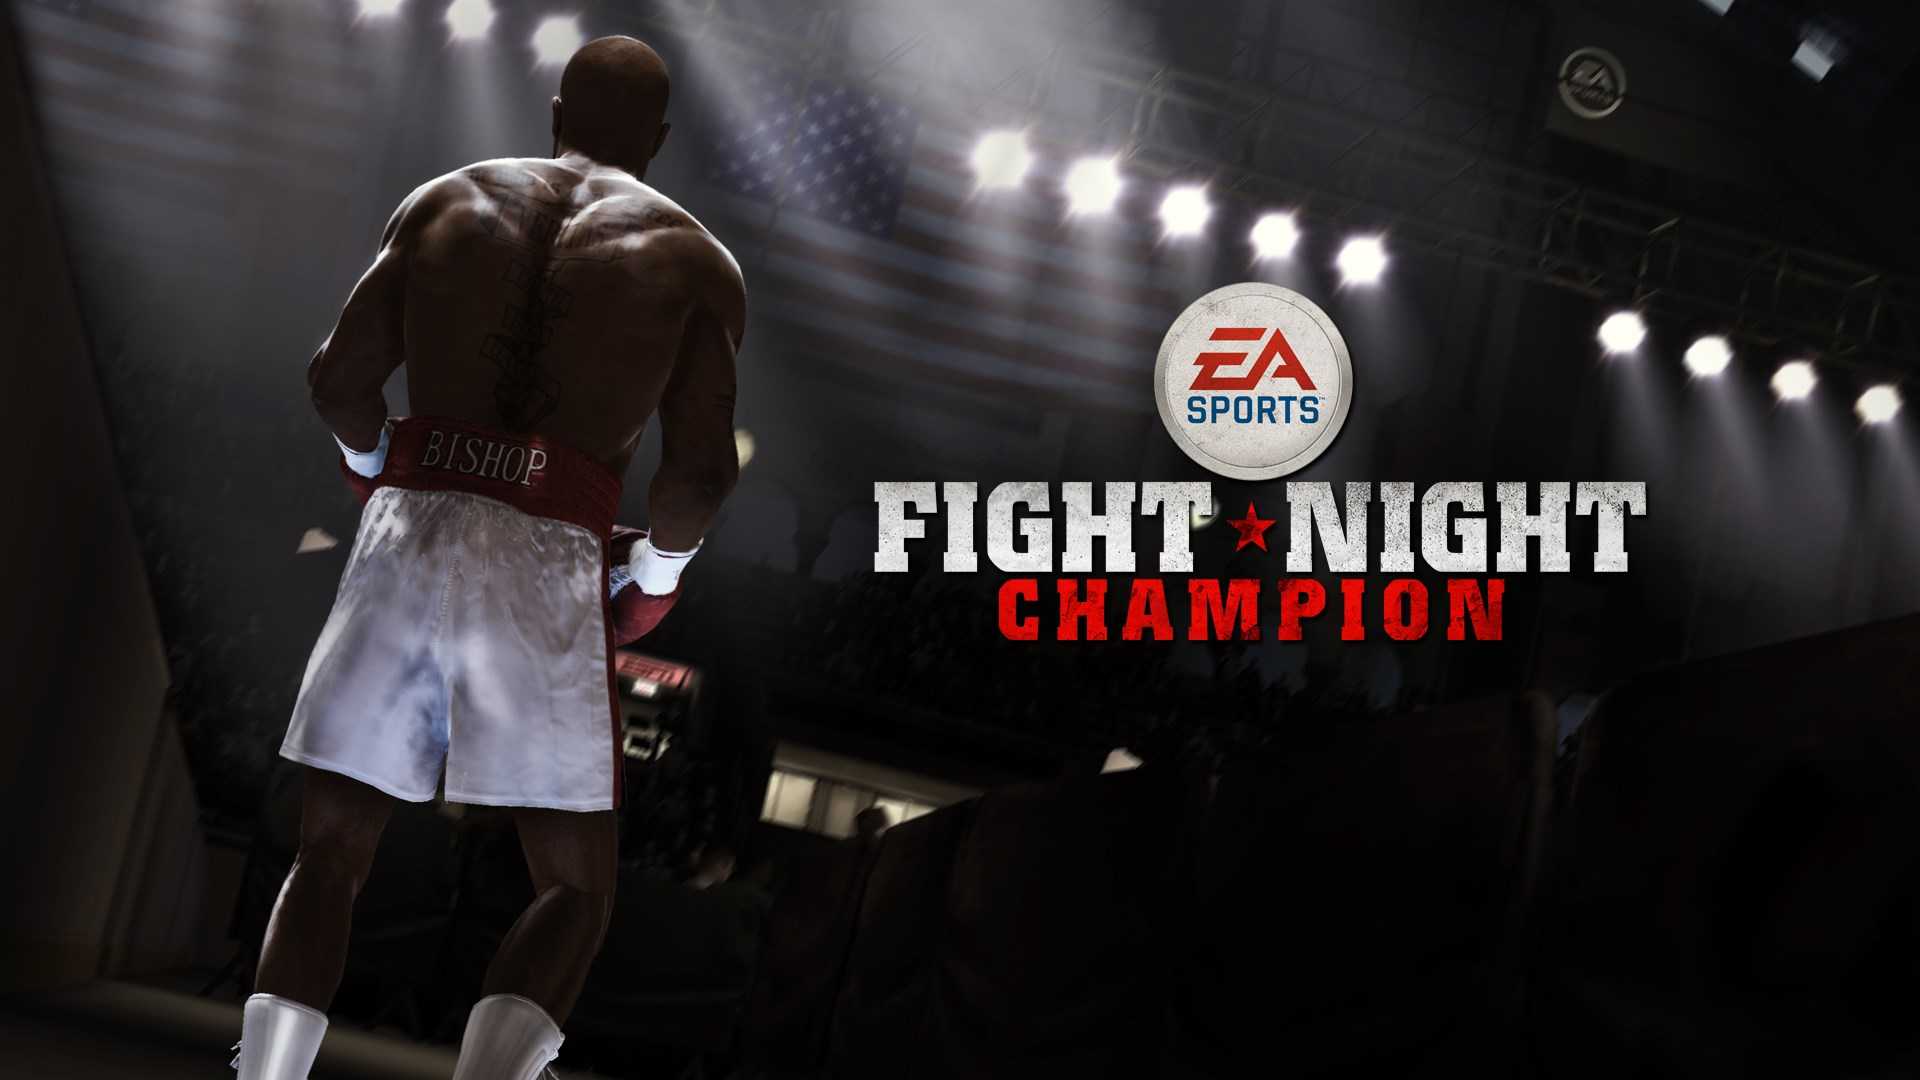 registration code fight night champion .txt